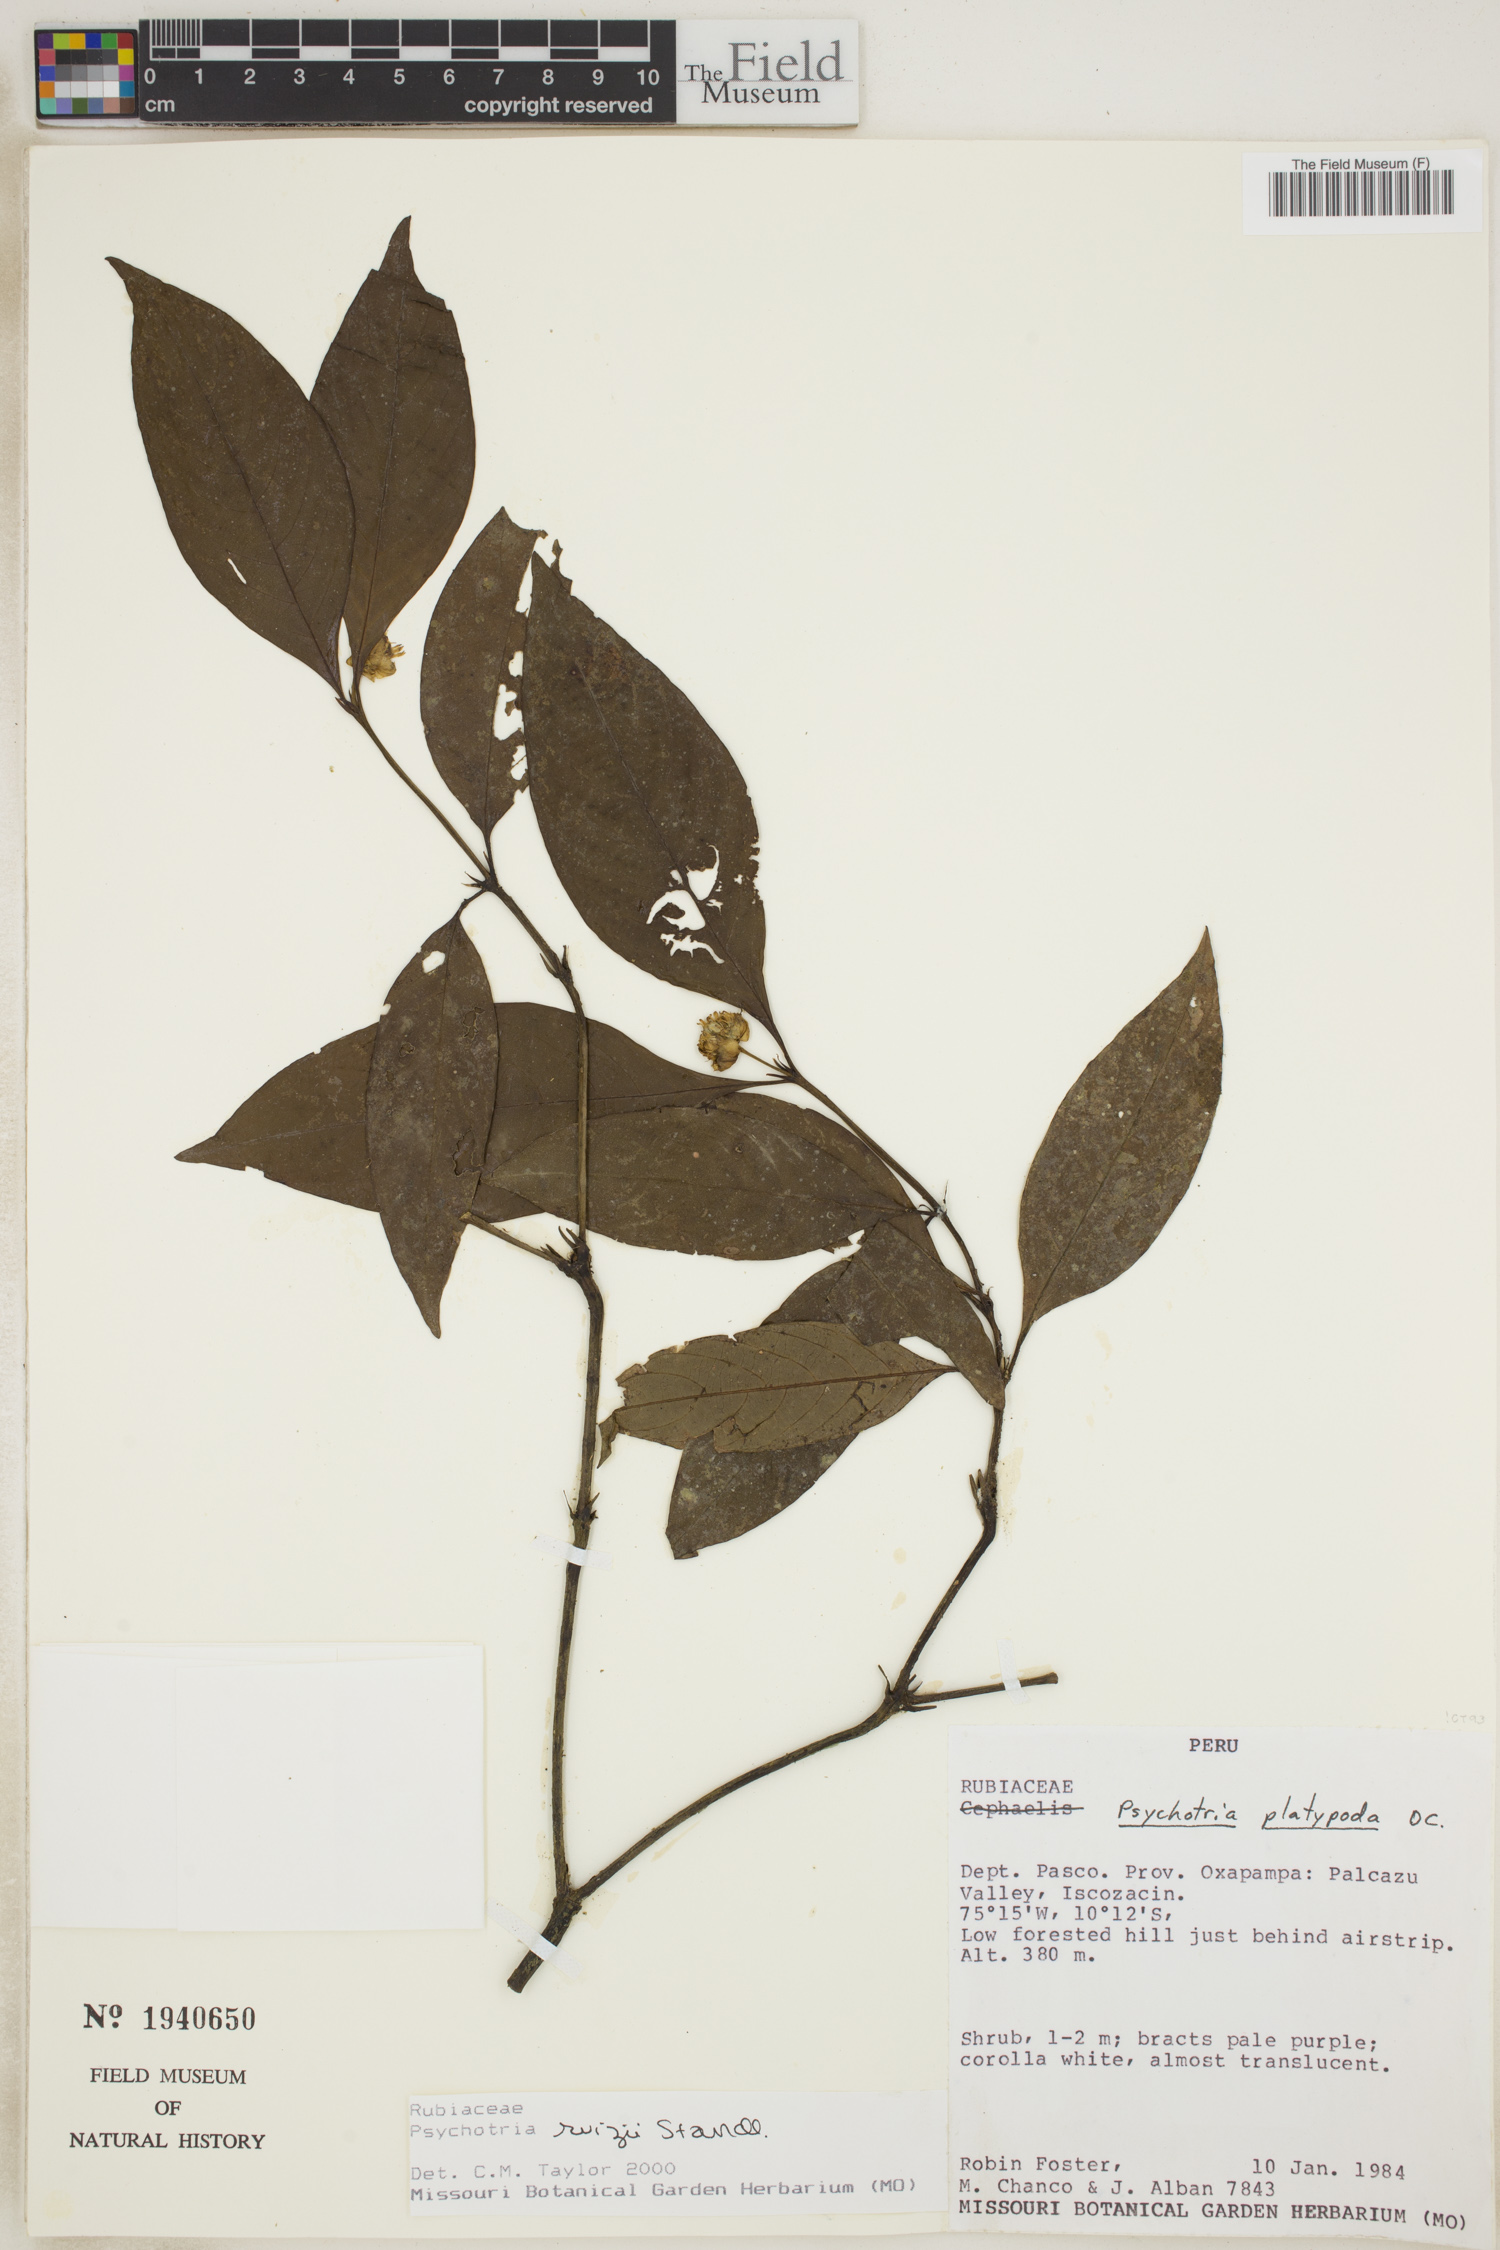 Psychotria ruizii image